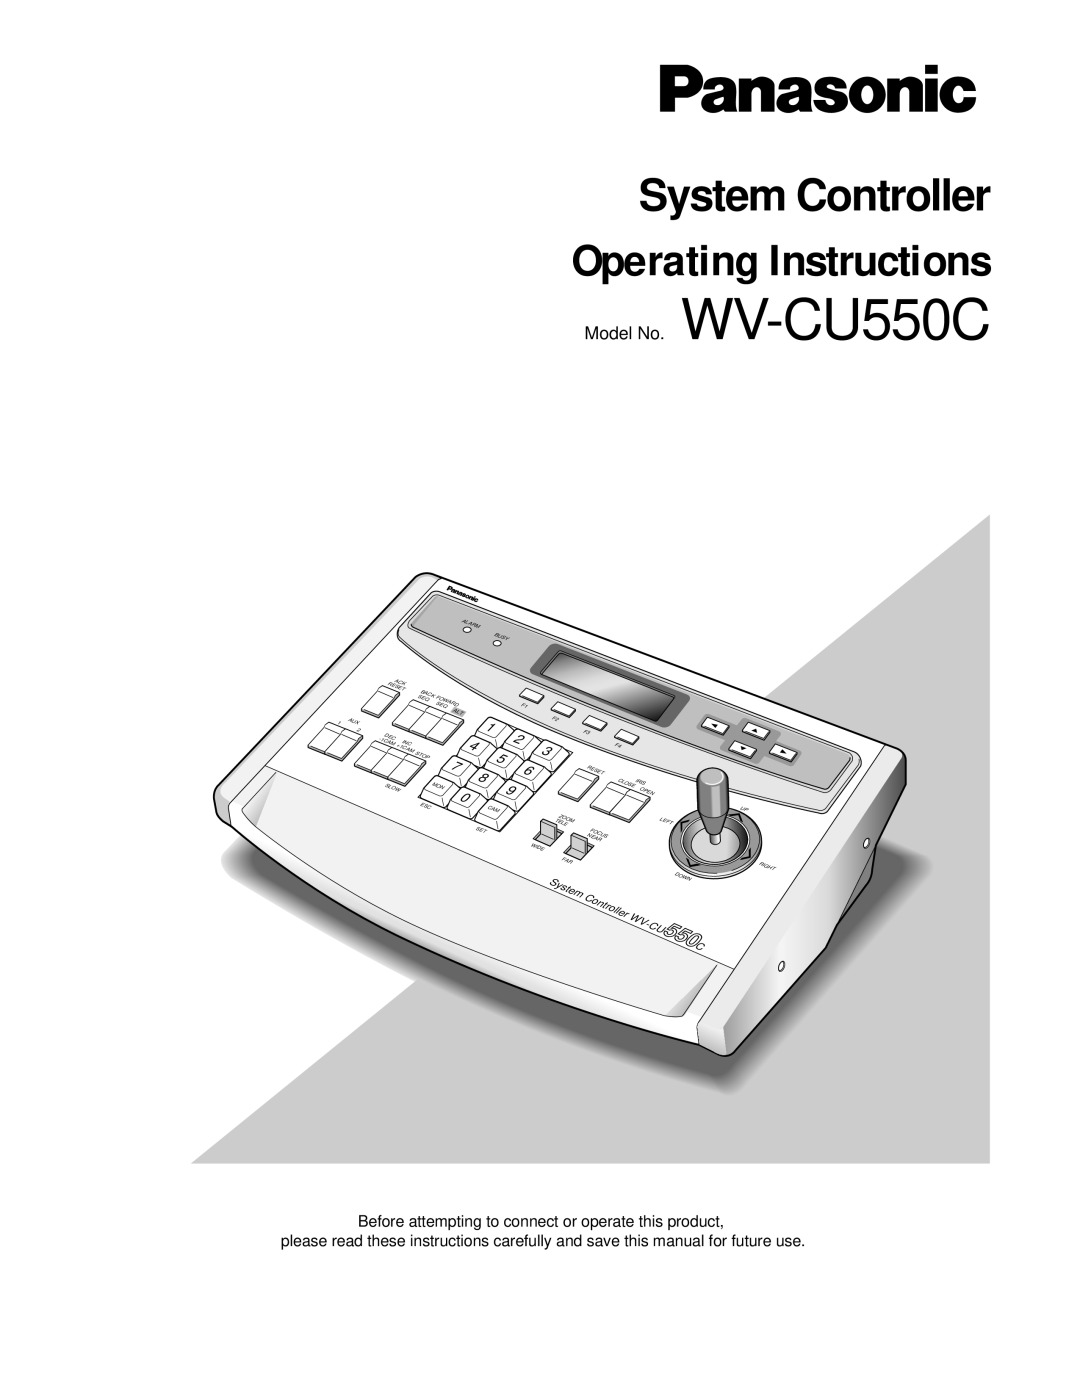 Panasonic operating instructions Operating Instructions, System Controller, Model No. WV-CU550C 